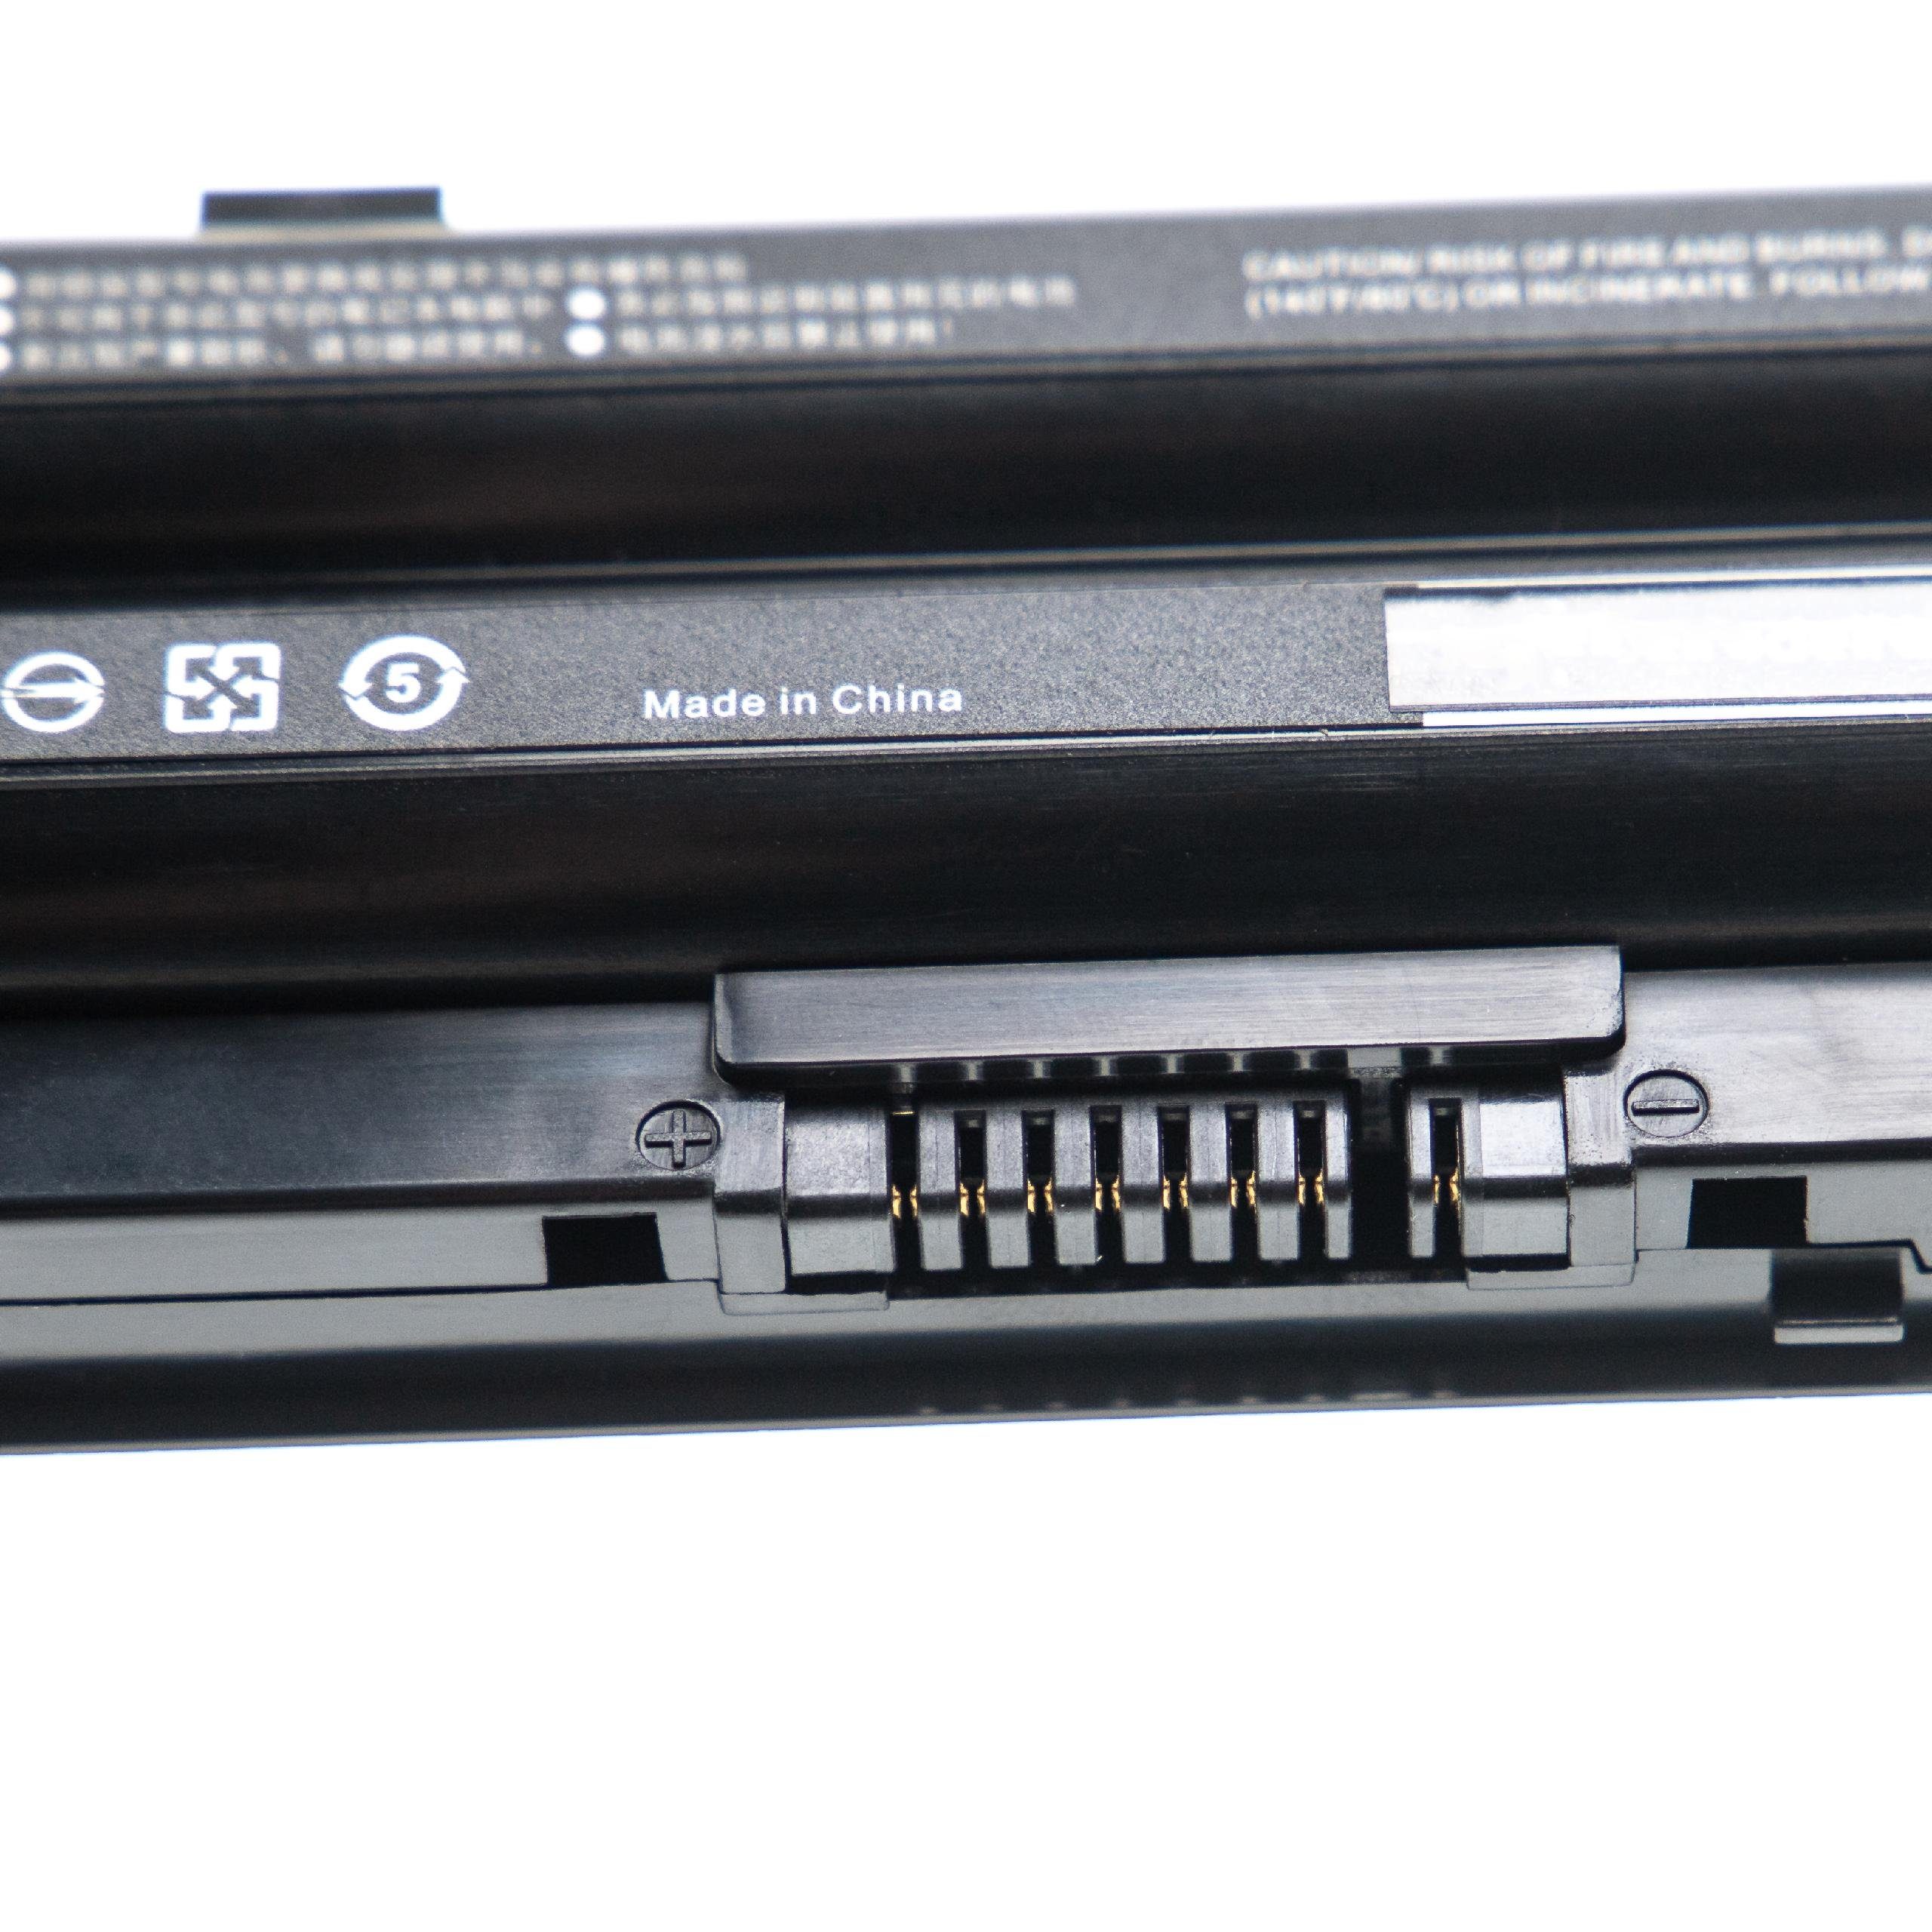 vhbw passend für Fujitsu A544 (M7501FR), LifeBook A544 A544 mAh Laptop-Akku (M7501GB), 4400